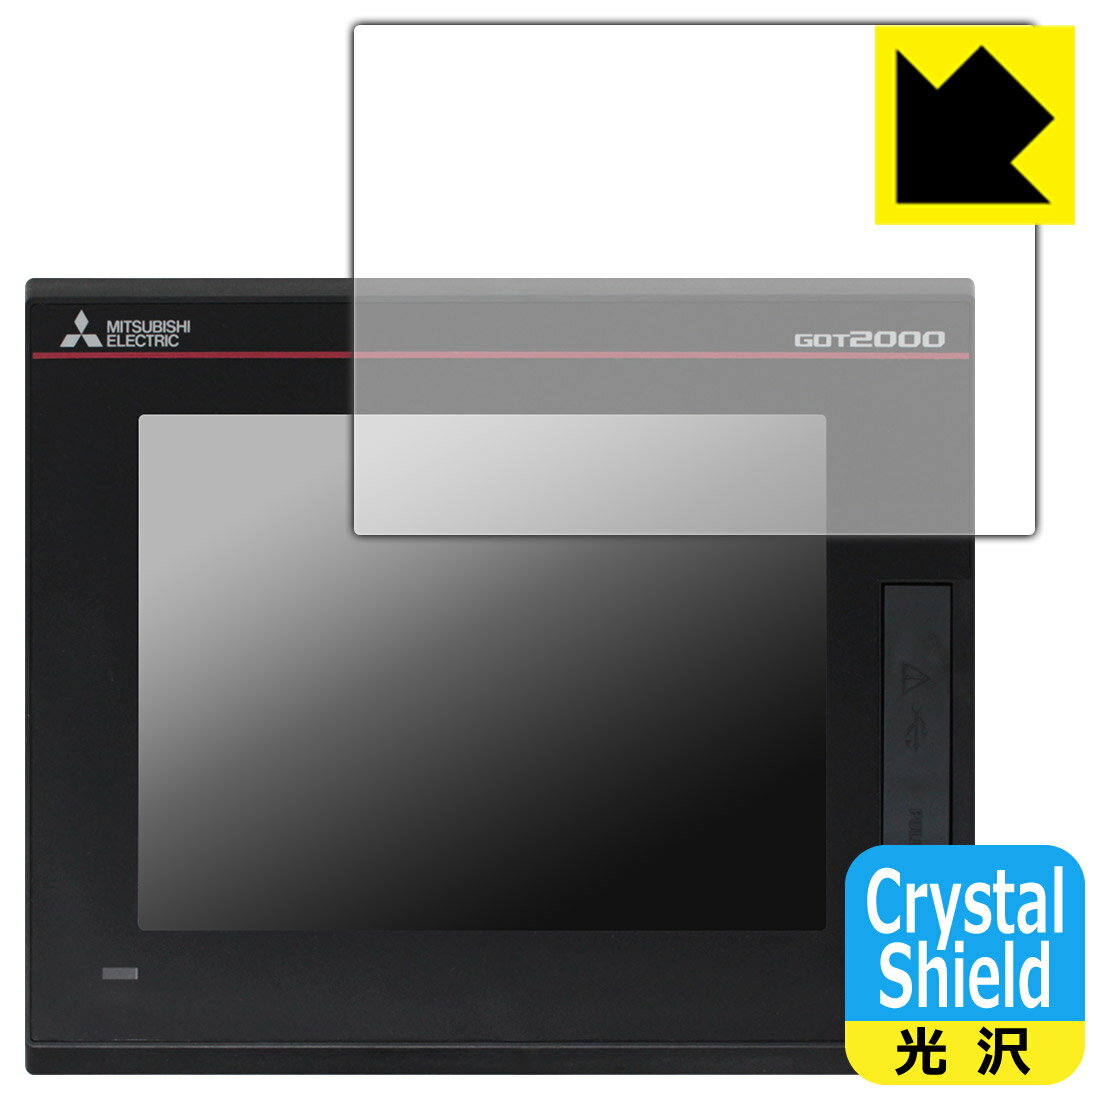 Crystal Shield 三菱電機 5.7型 表示器 GT2505-VTBD (液晶用) 3枚セット 日本製 自社製造直販